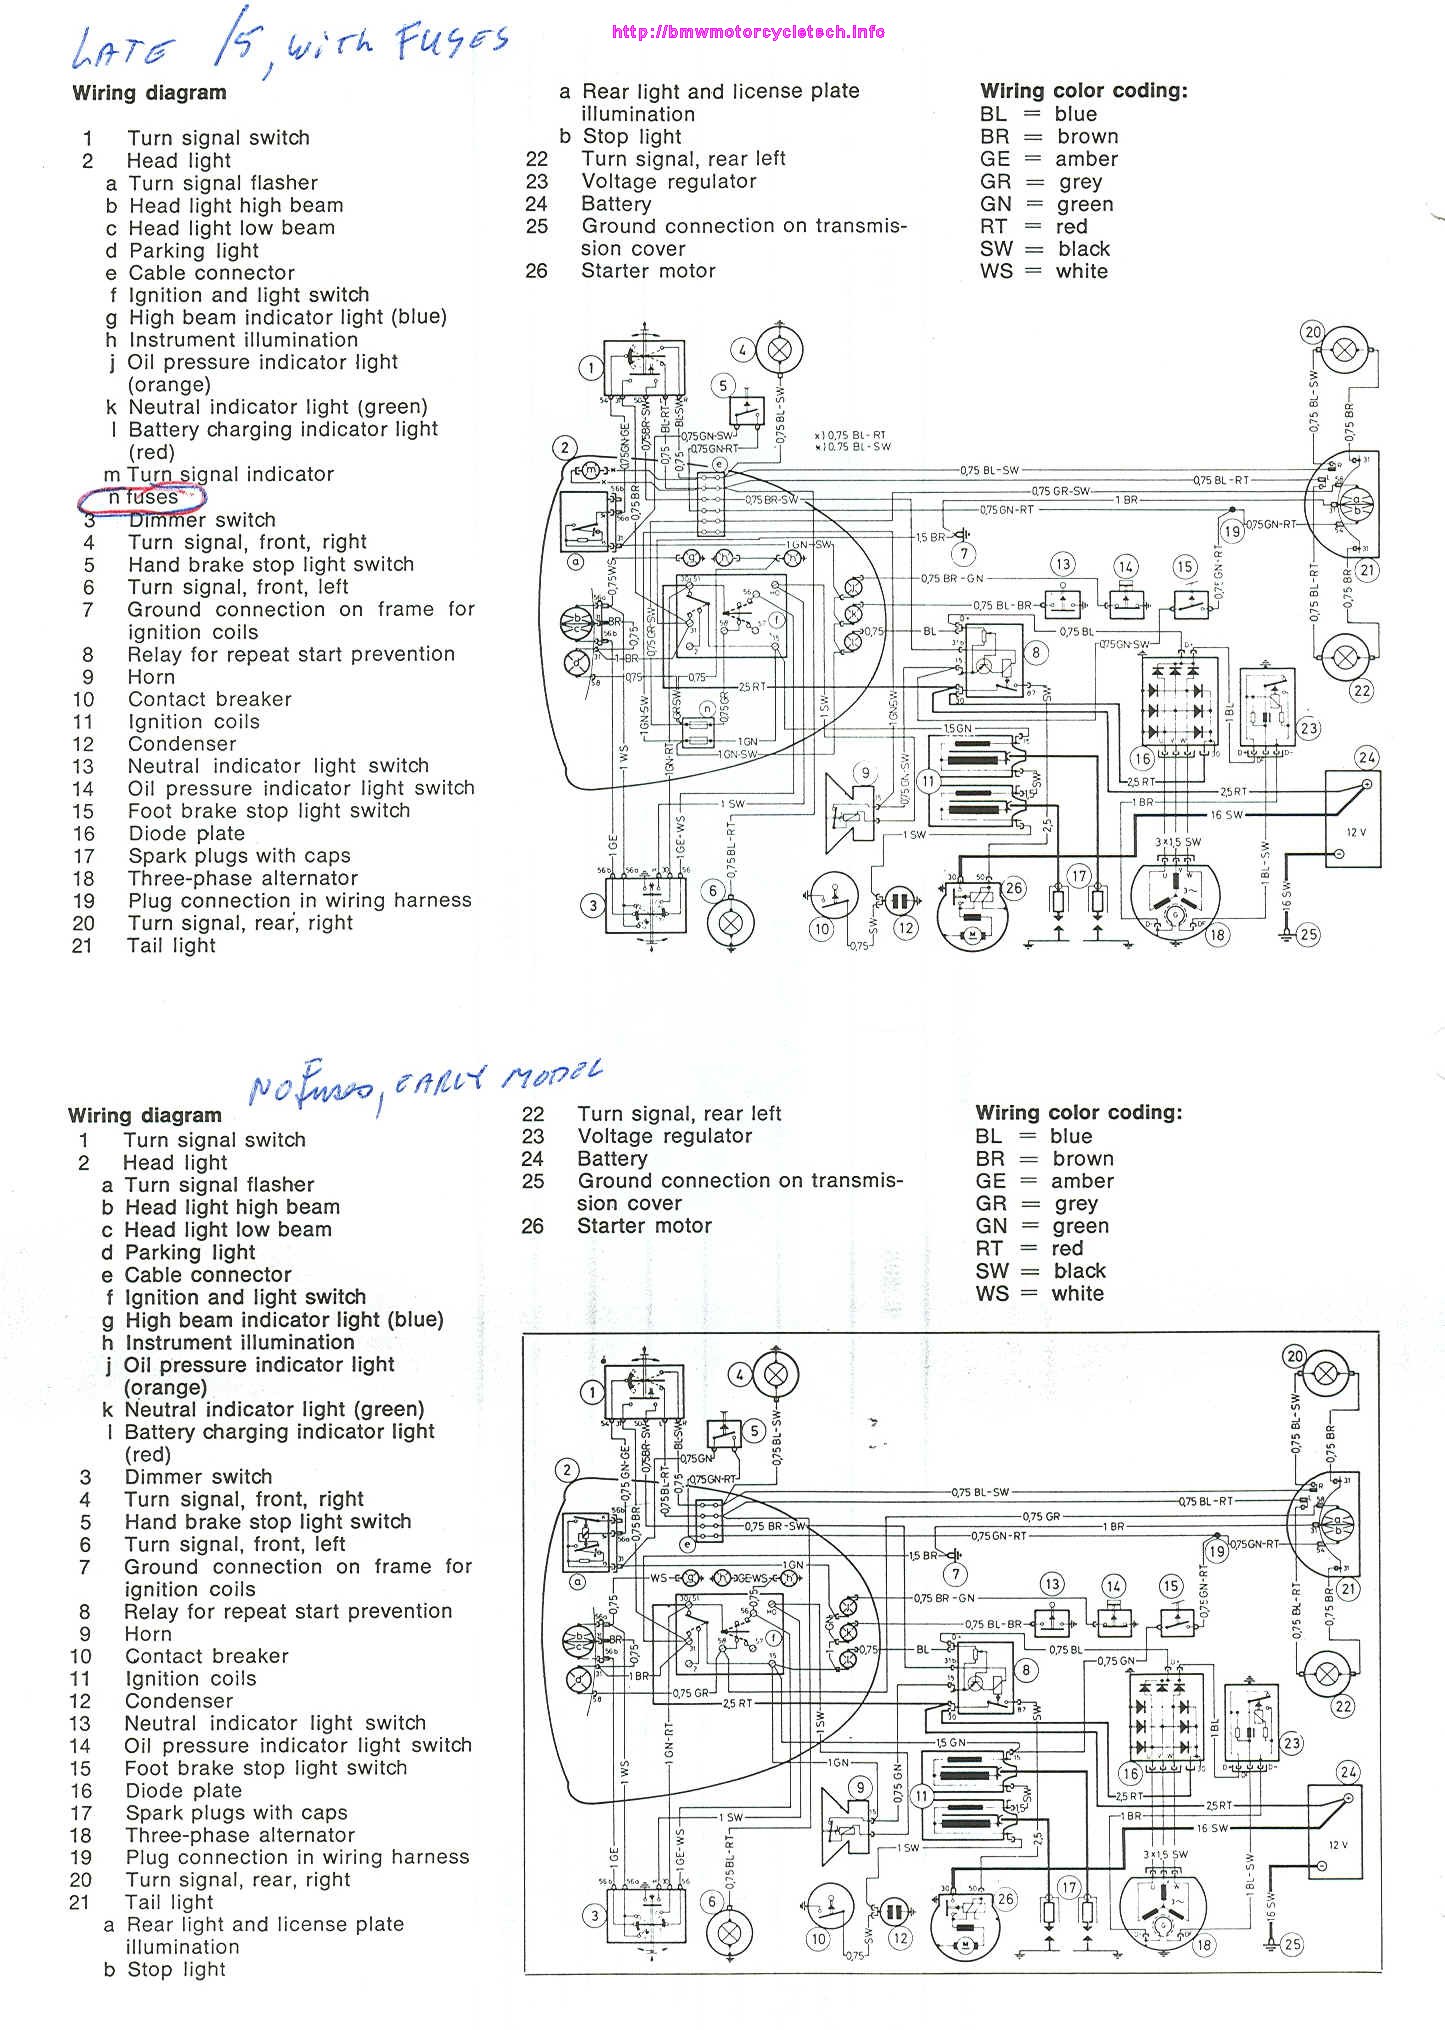 R75 '72 project – wiring diagram BMW 2002 Tii BMW MOA Forum